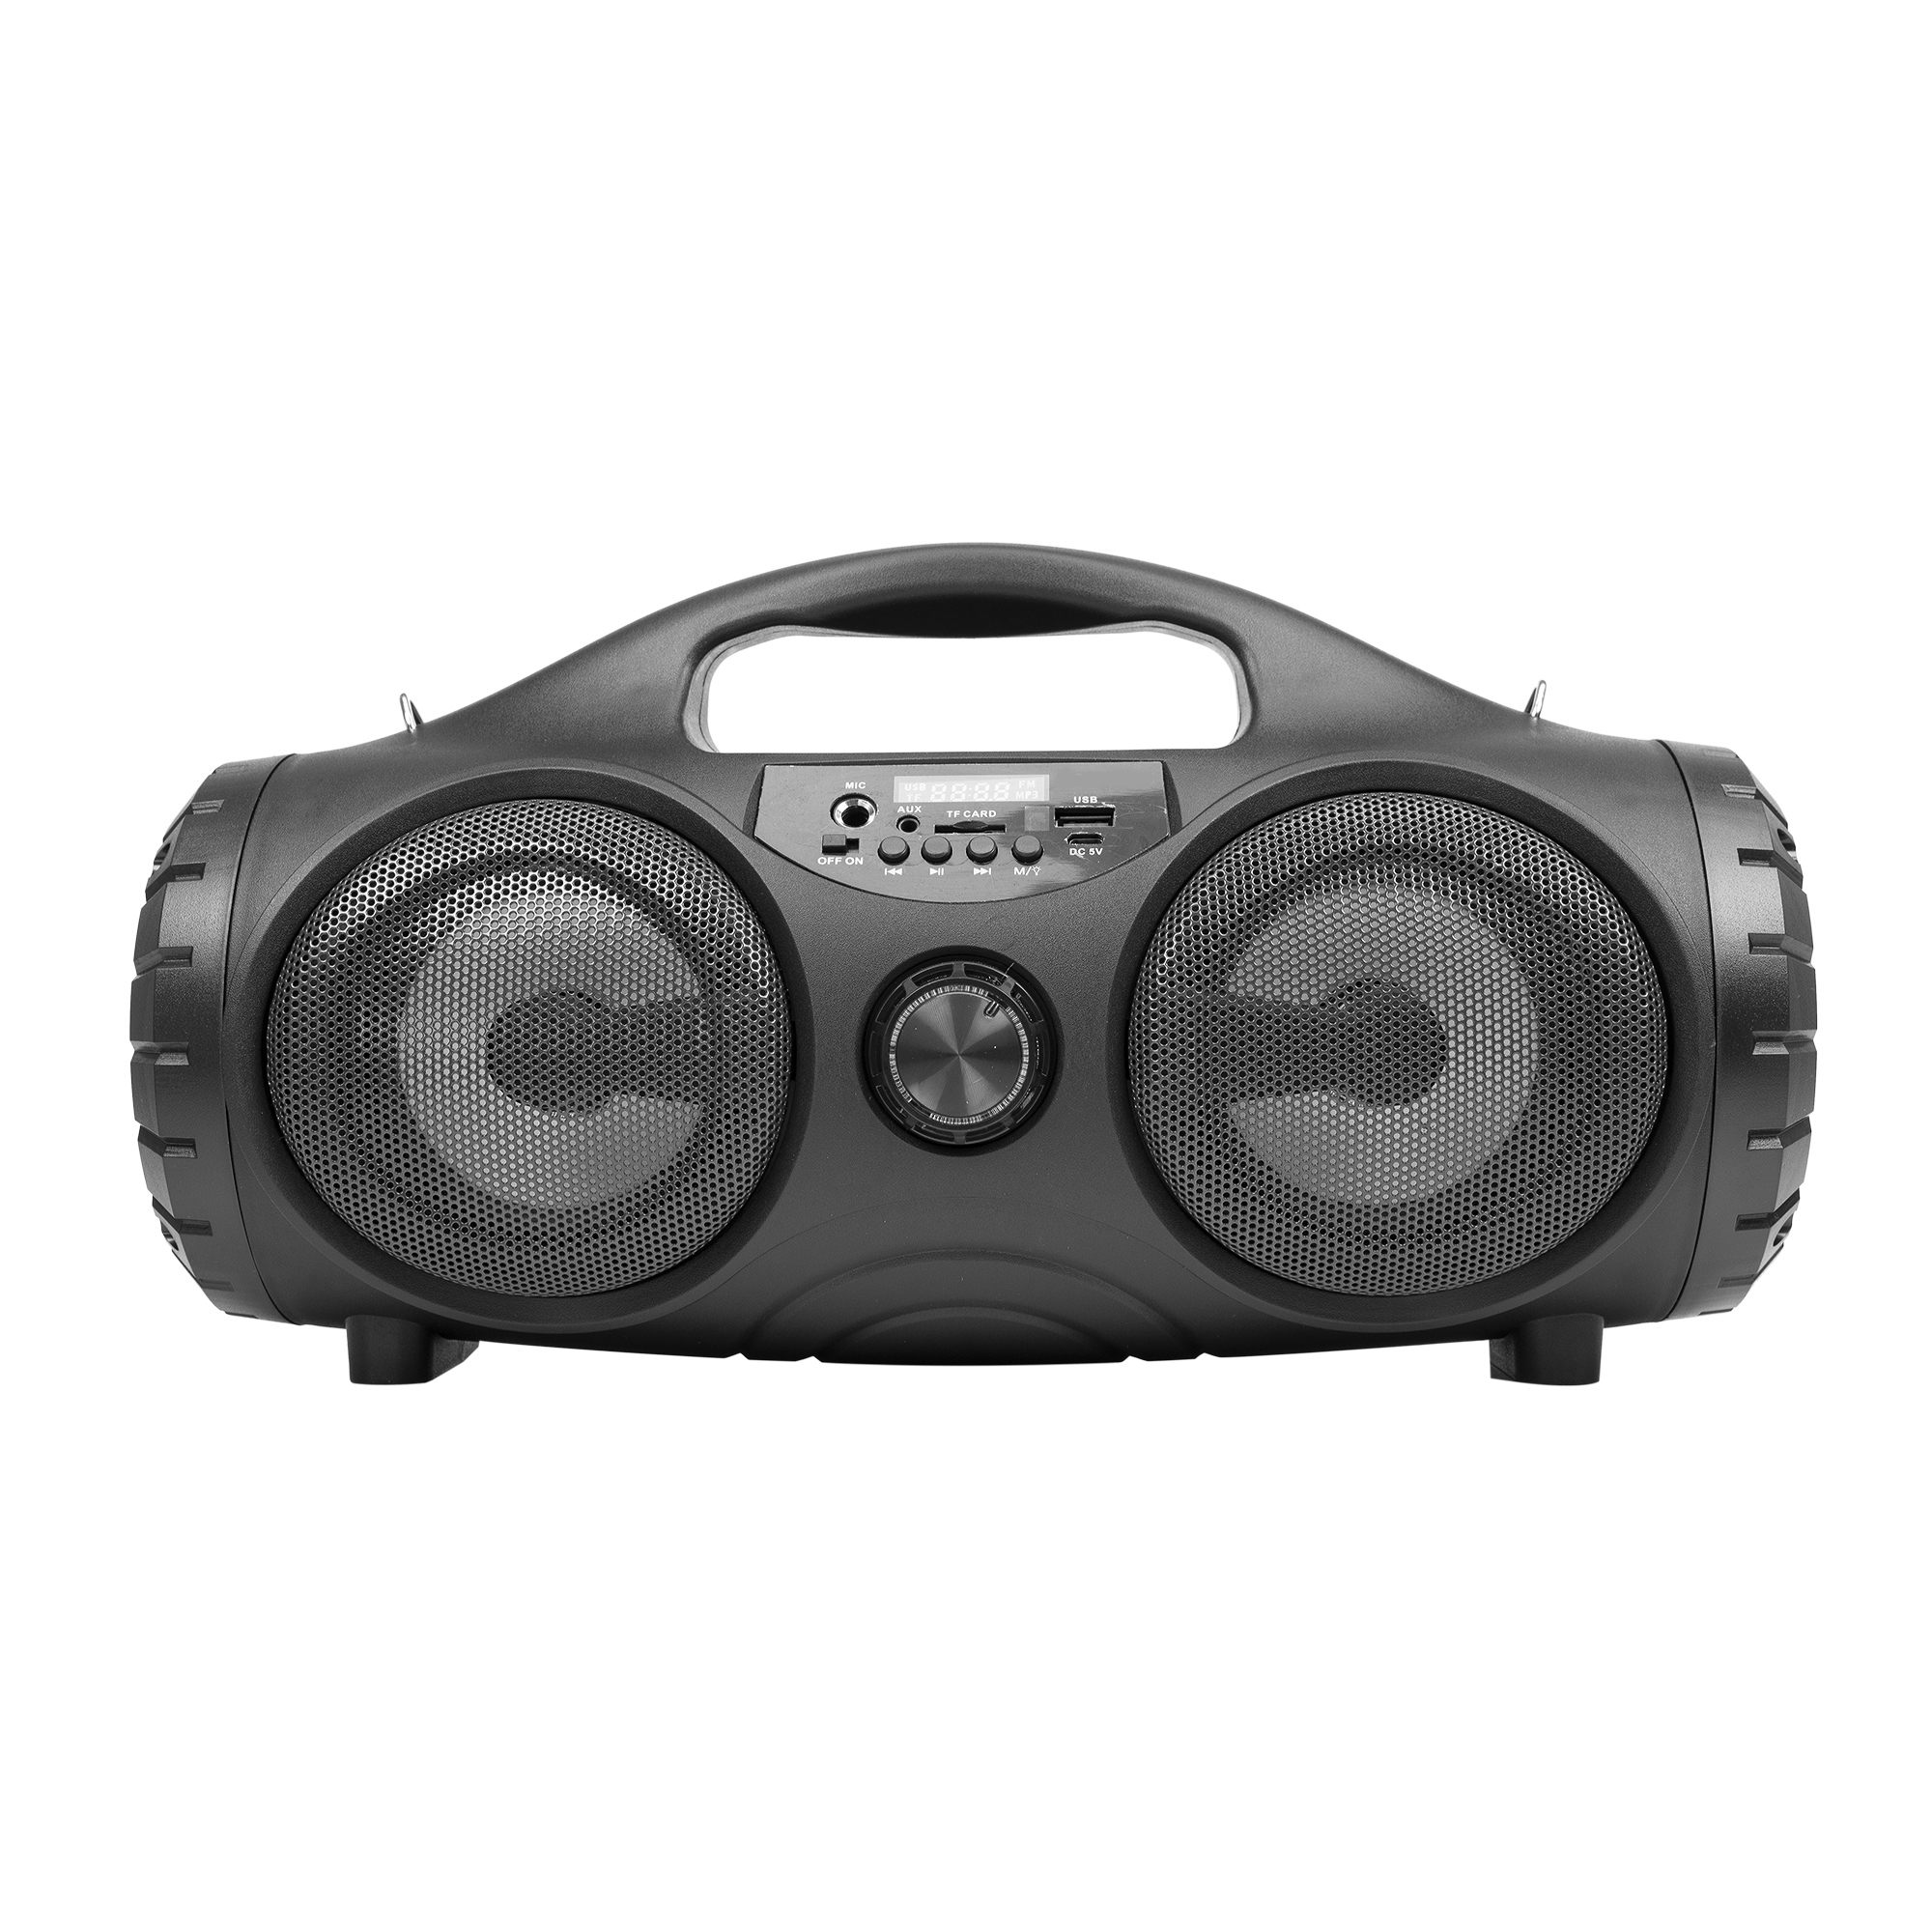 Boxa portabila PNI BoomBox BT102 cu Bluetooth, 2 x 5W, MP3 player, radio FM, USB, slot micro SD, Aux in